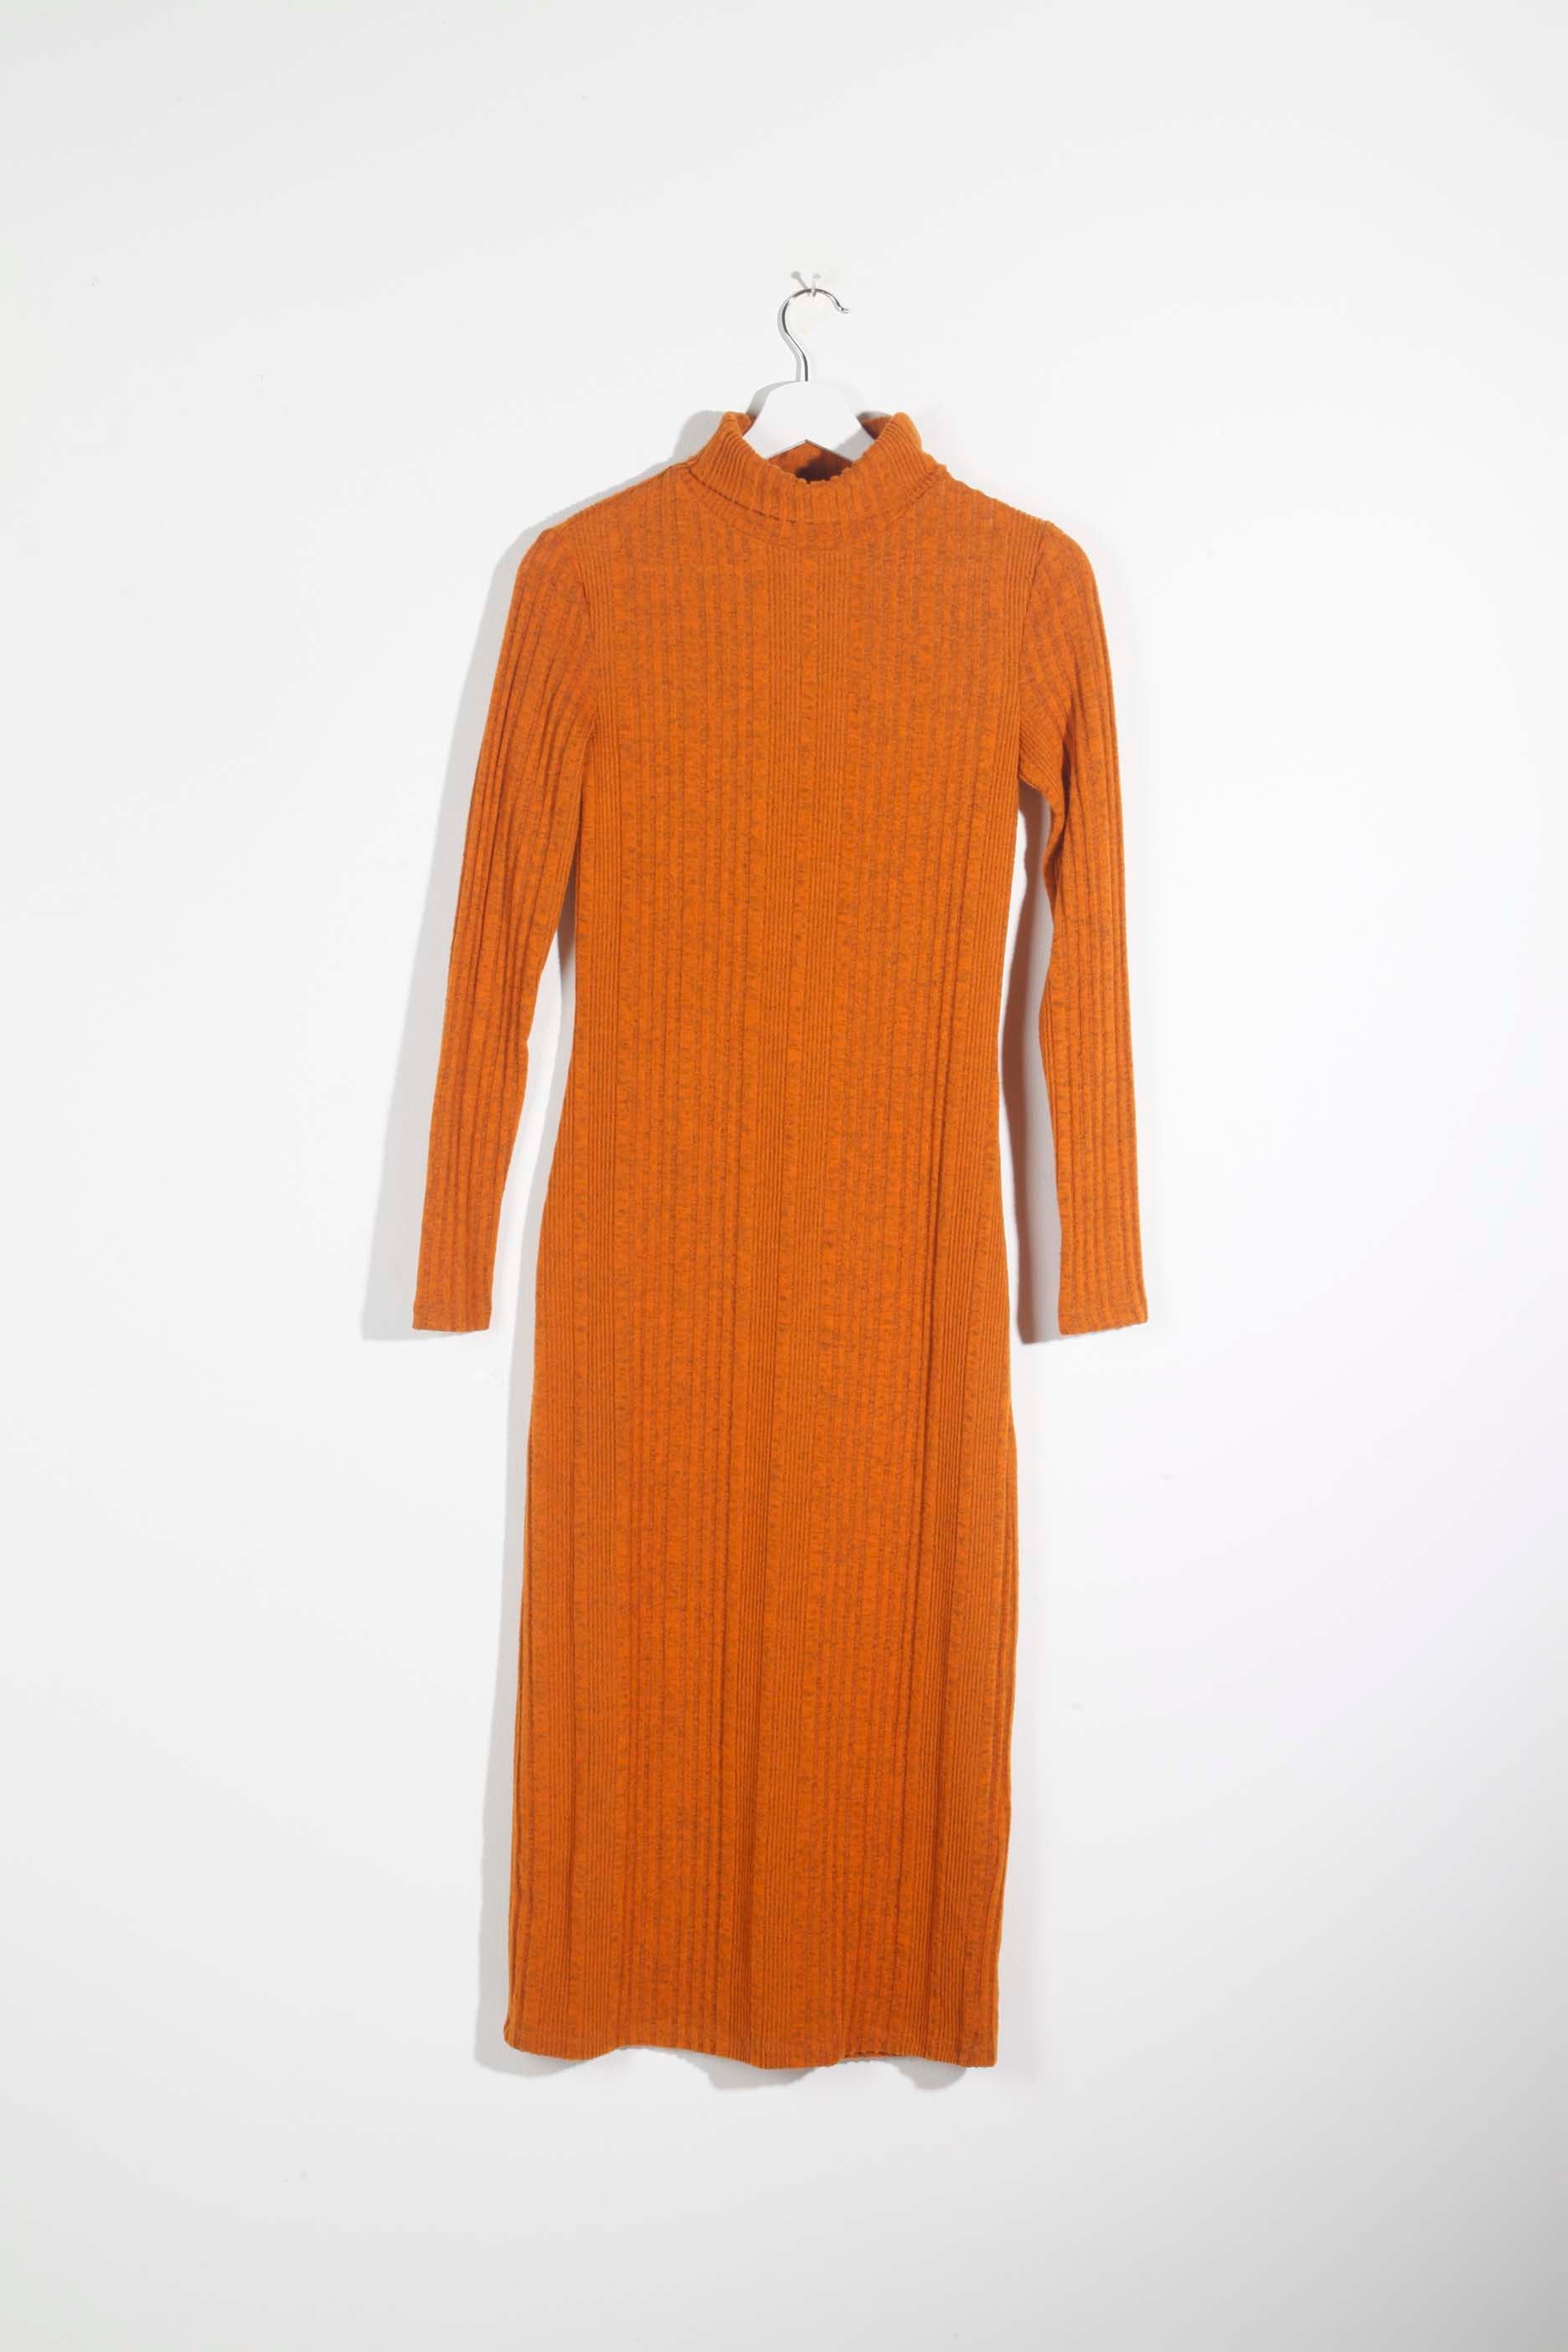 Long Orange Ribbed Rollneck Dress (Small)